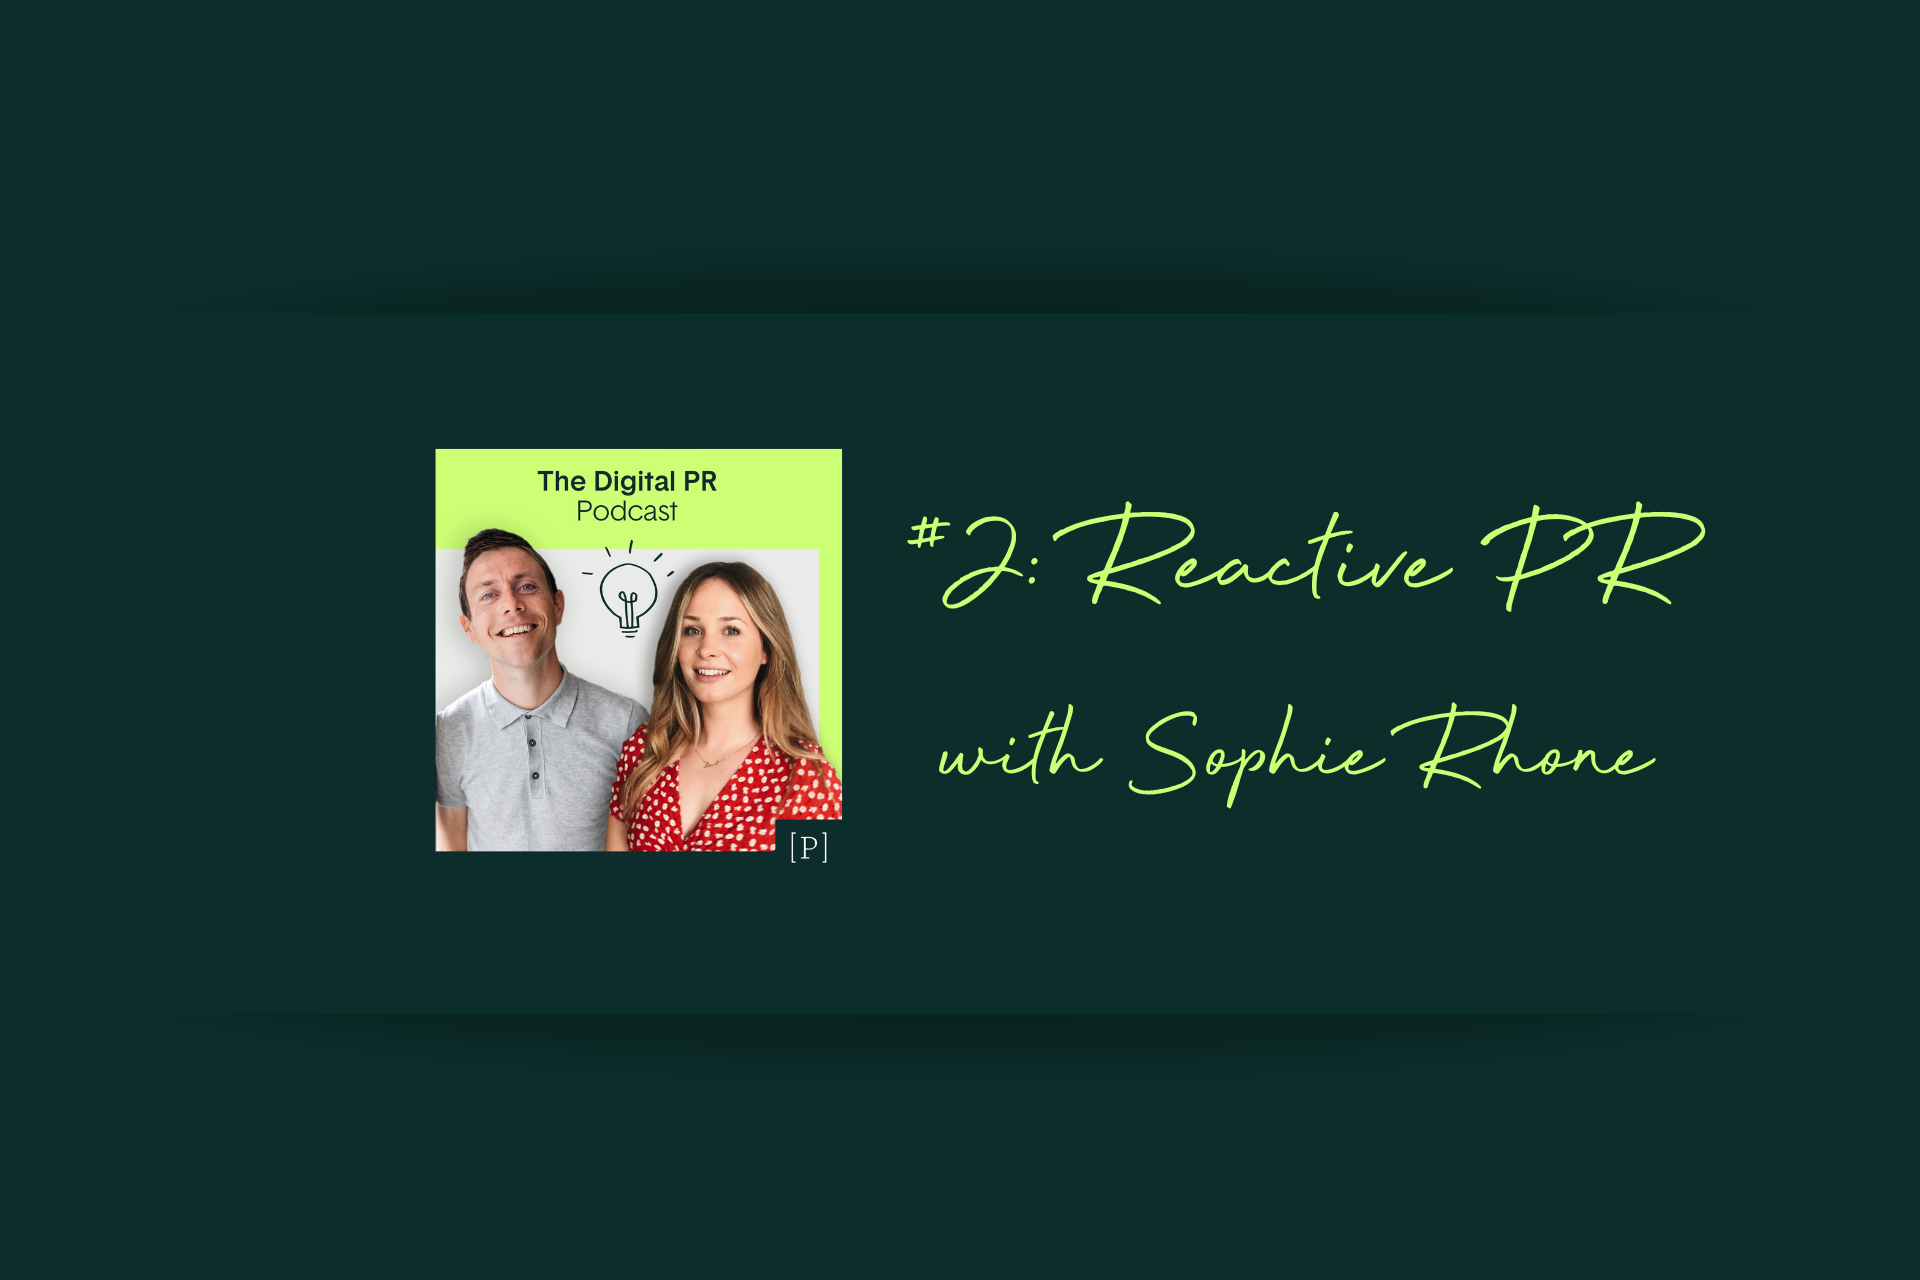 The Digital PR Podcast episode 2 - Reactive PR with Sophie Rhone